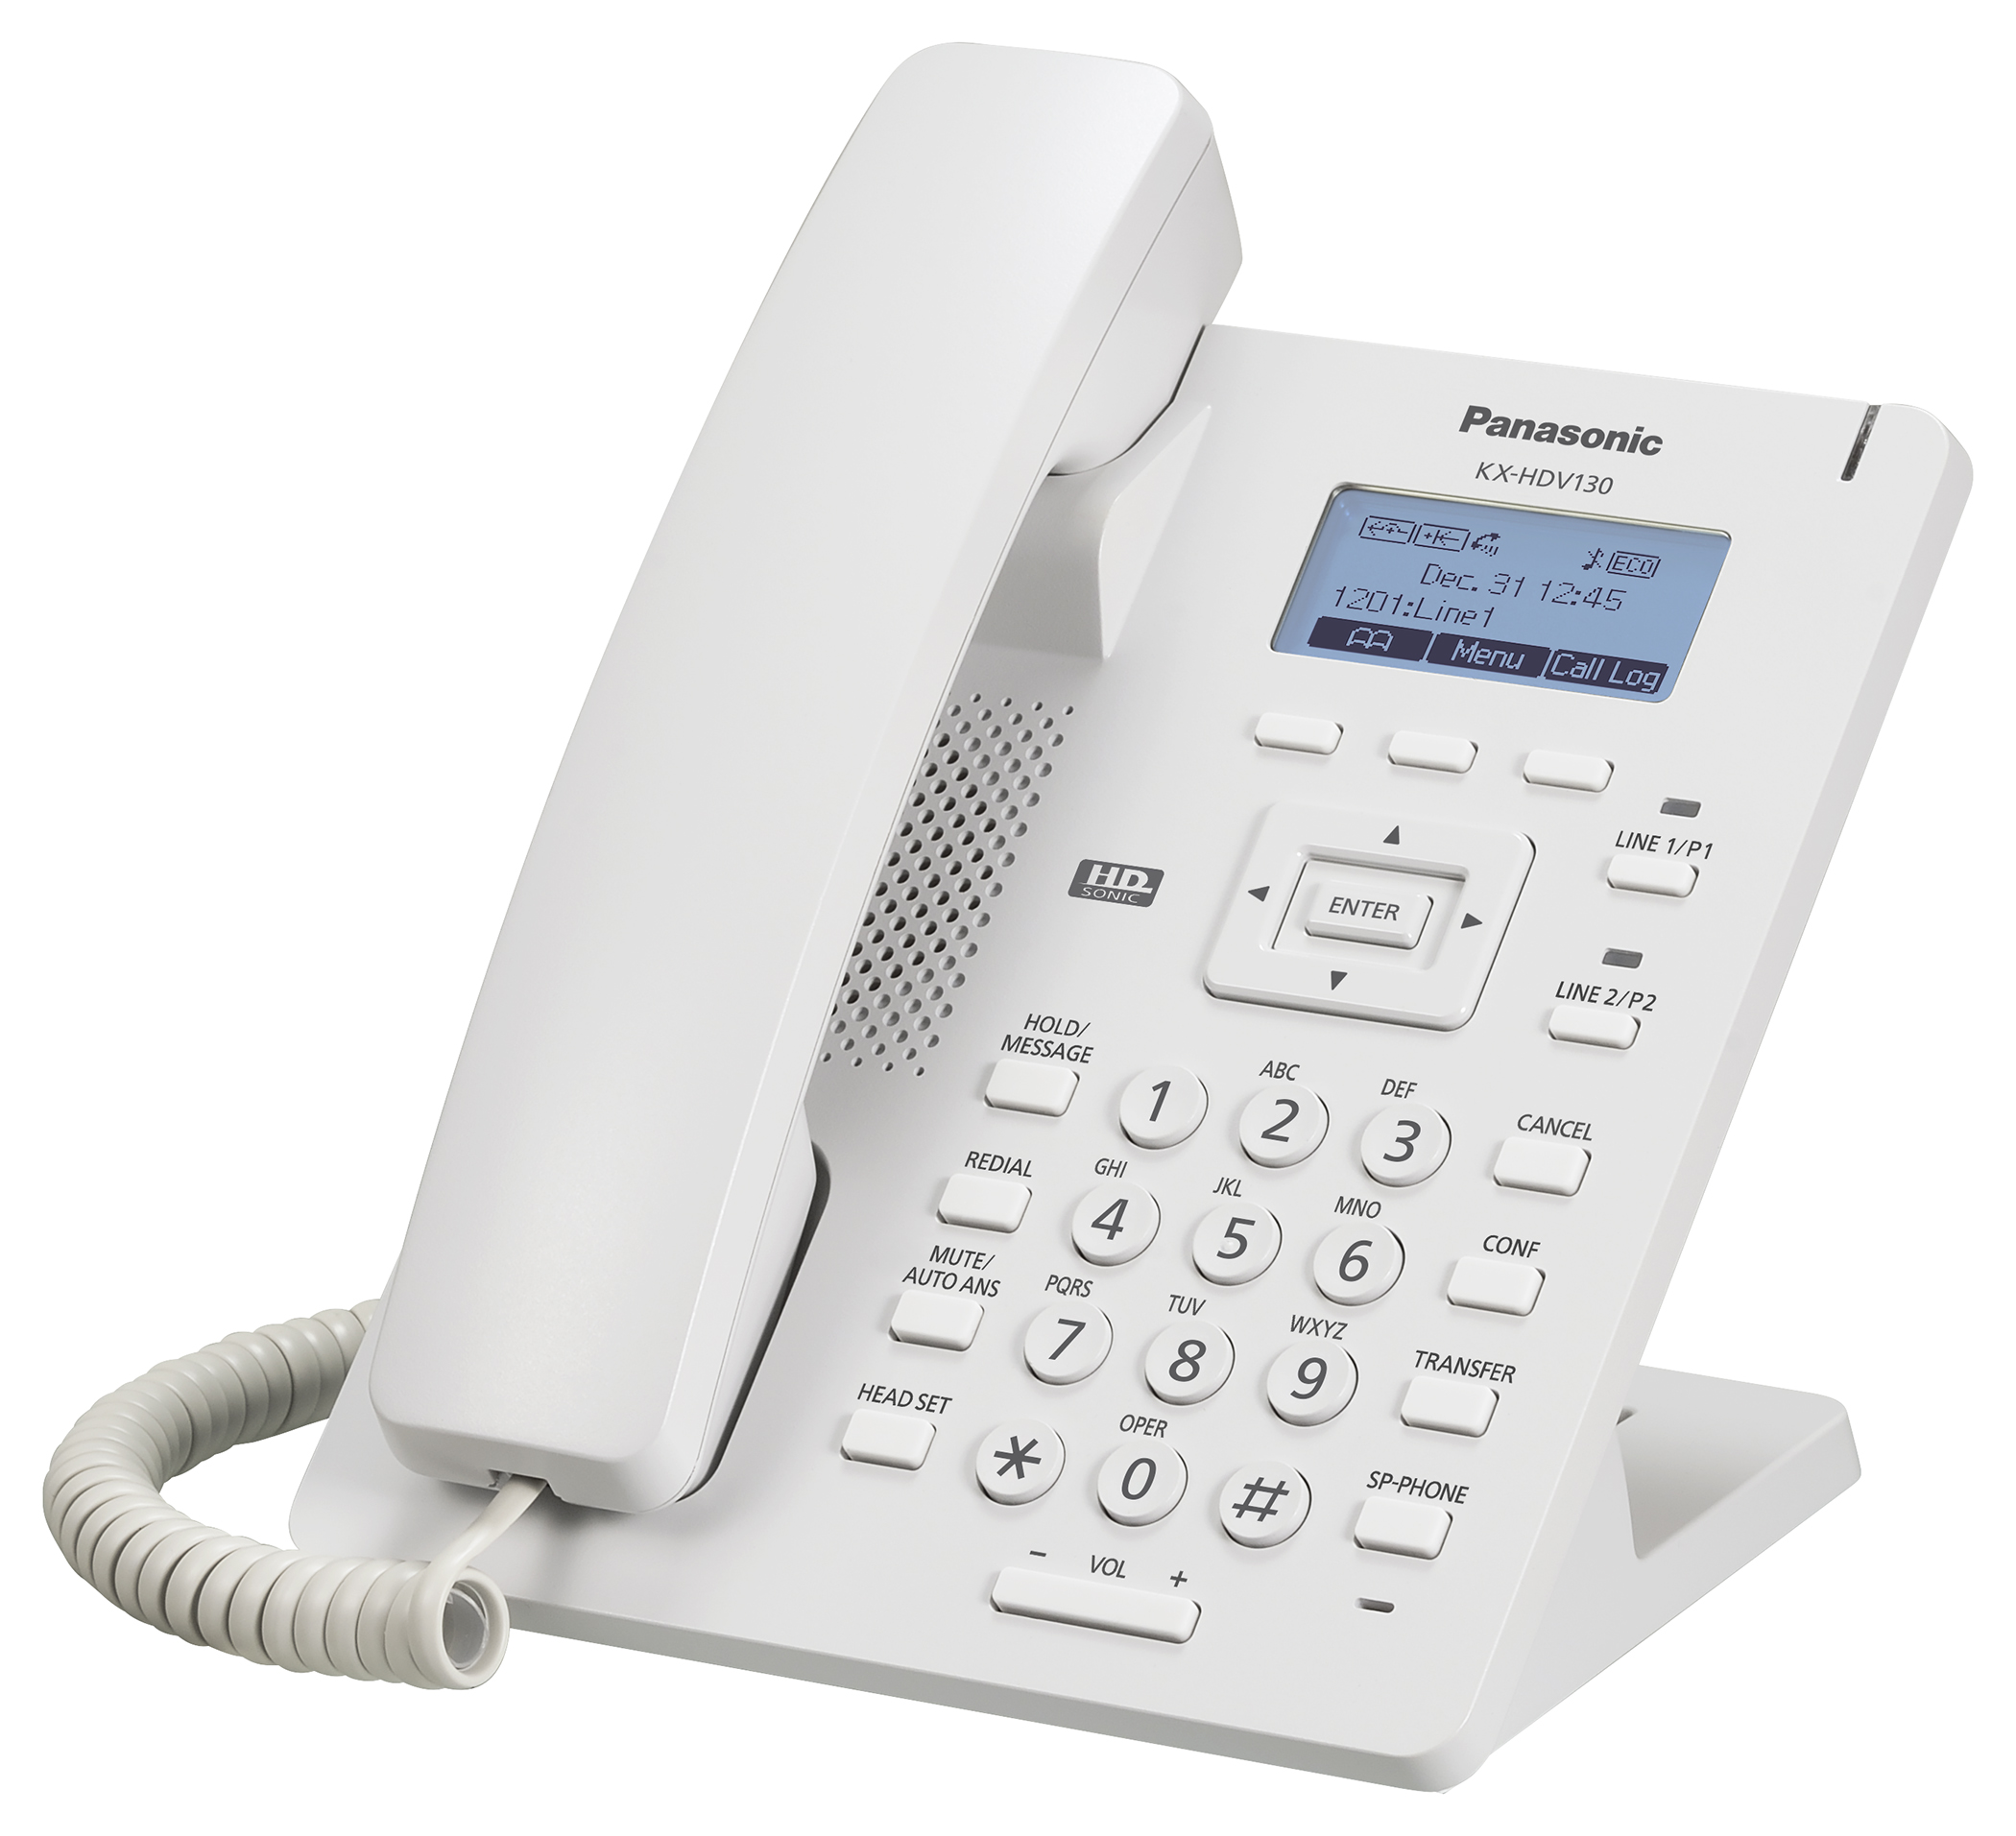 KX-HDV130 Basic SIP Phone | Panasonic North America - United States